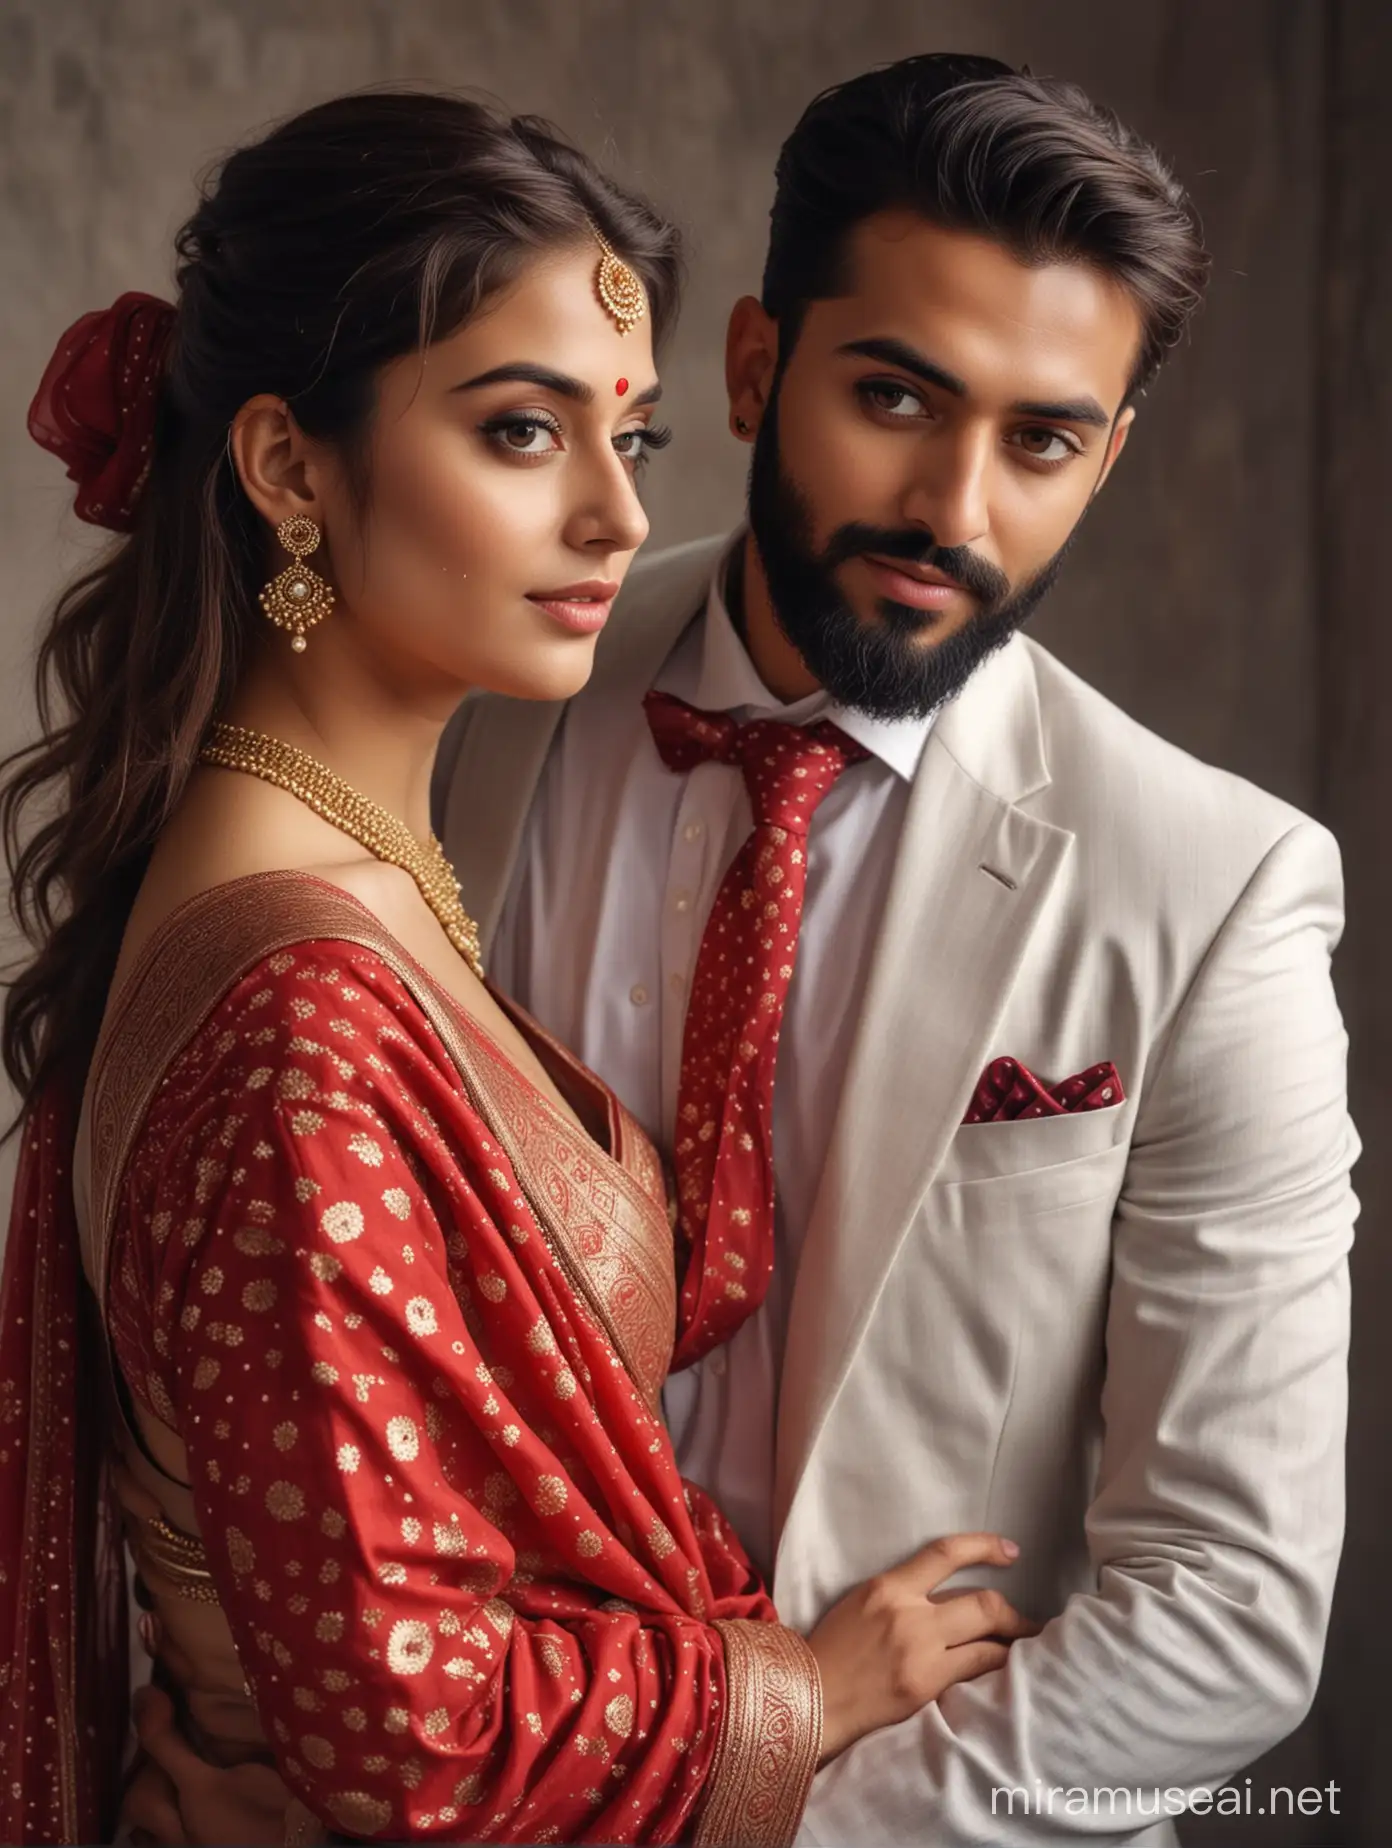 Elegant Embrace Stunning EuropeanIndian Couple in Traditional Attire